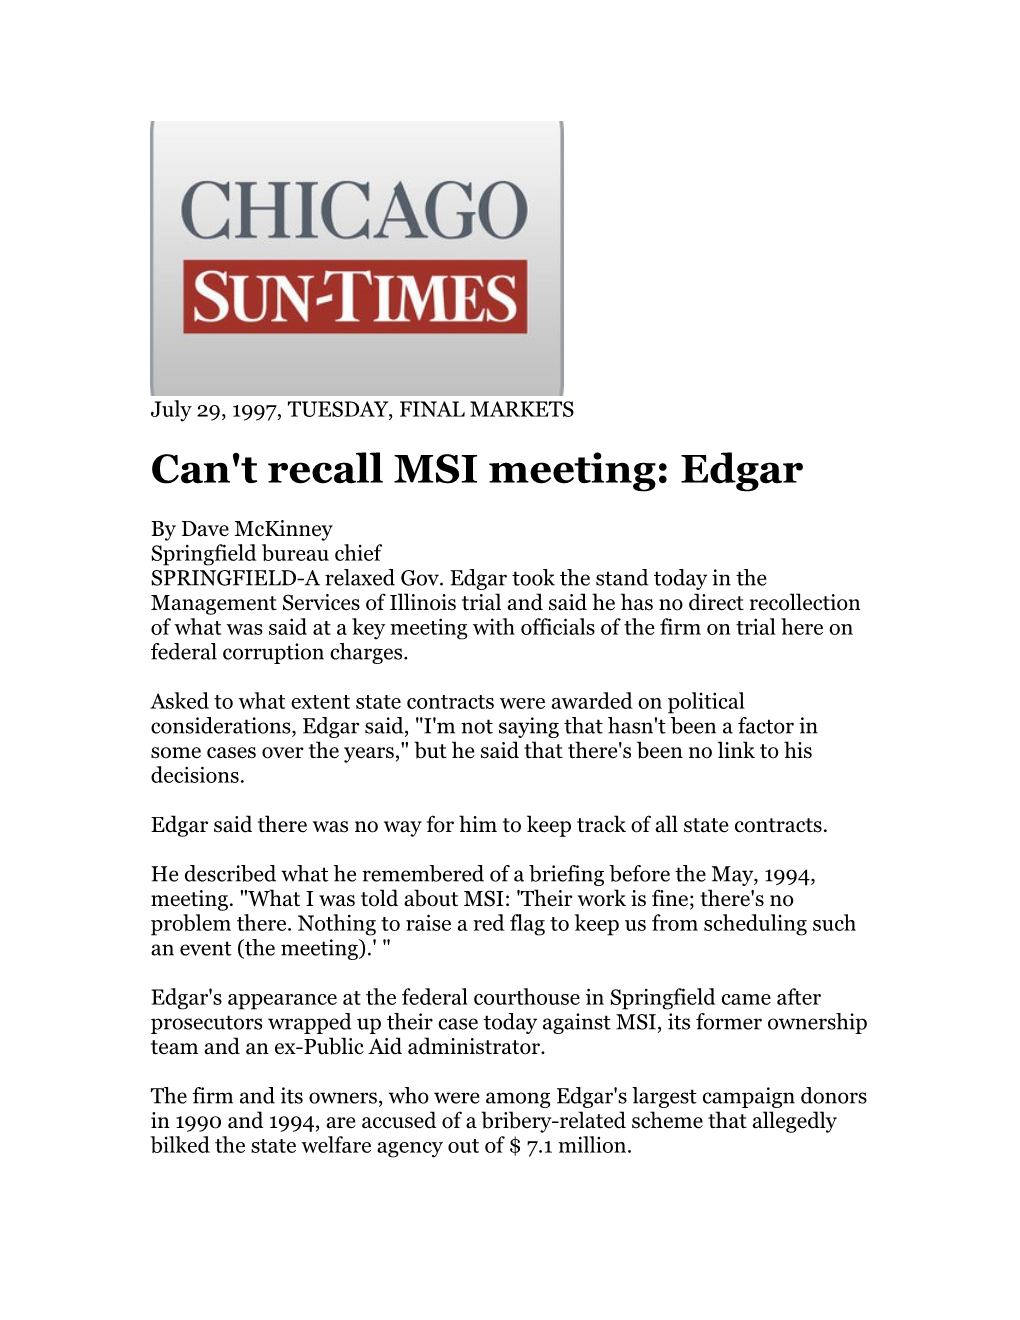 Can't Recall MSI Meeting: Edgar